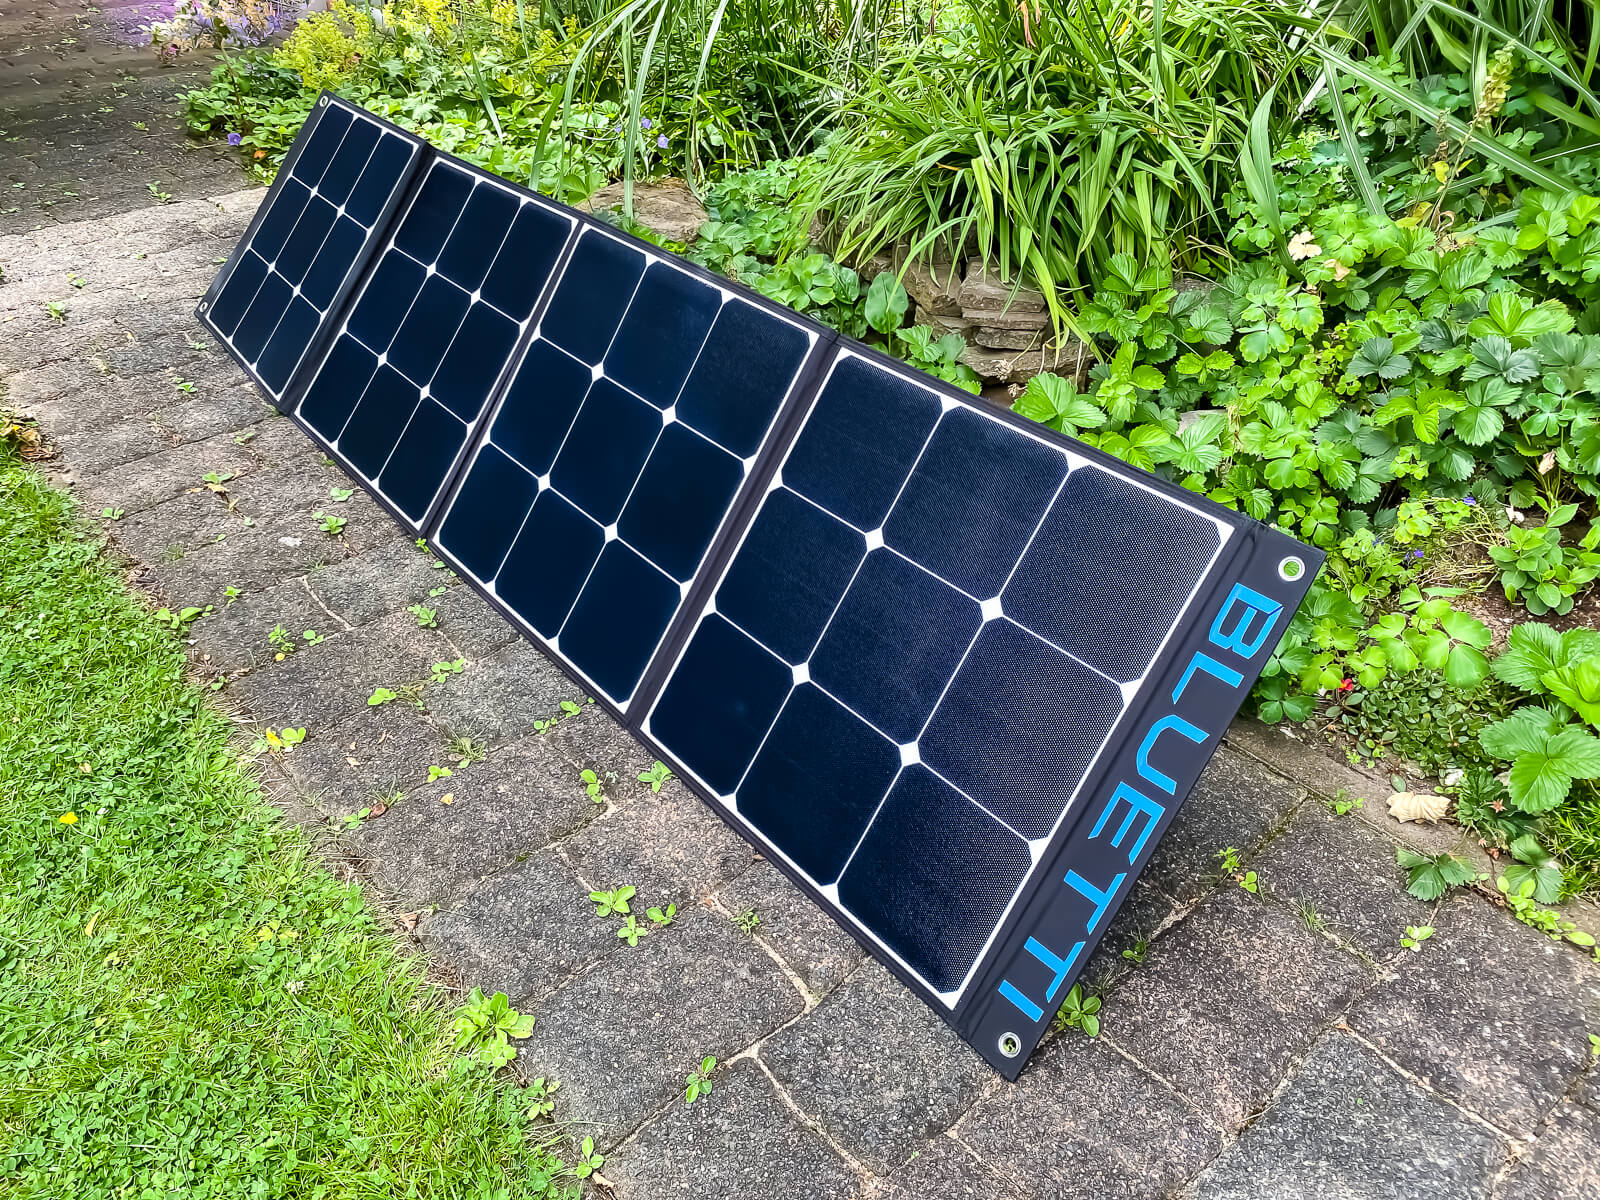 Bluetti SP 200 Solarpanel Test - Aufgestellt, entfaltet, Vorderseite, komplett